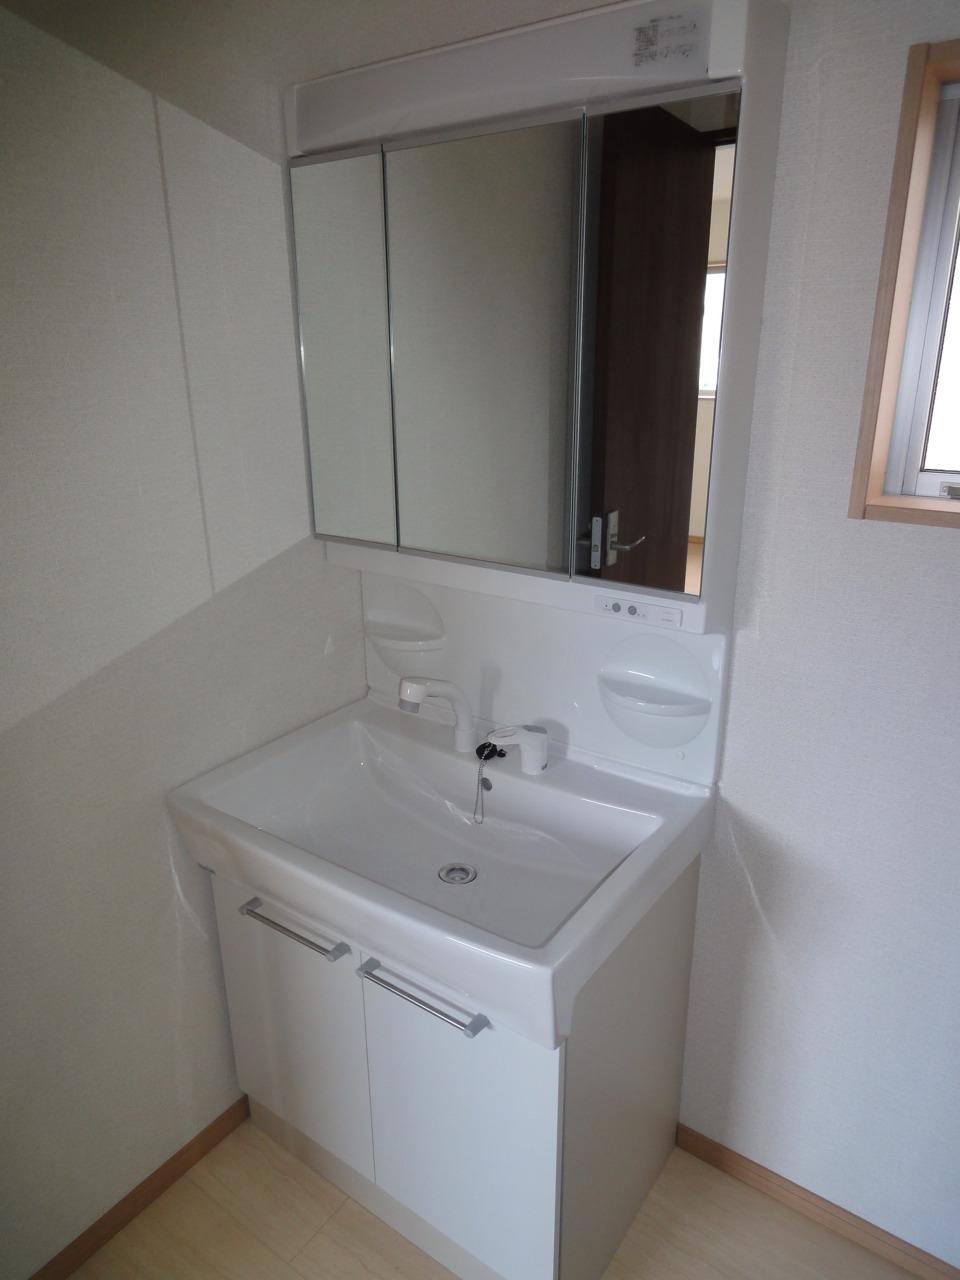 Wash basin, toilet. (2013.11.01 shooting) Building 3